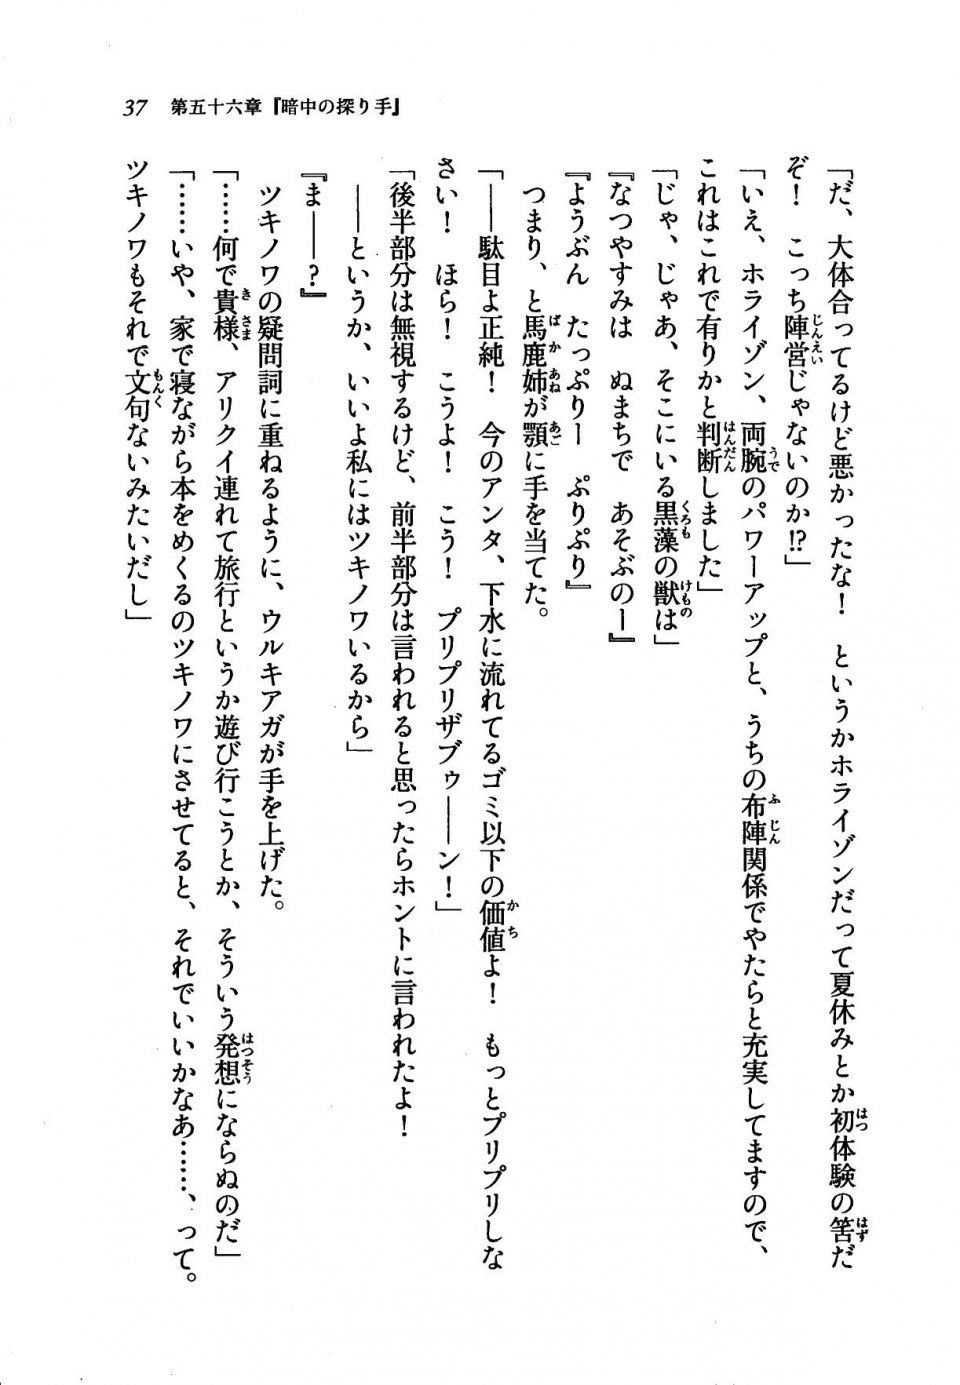 Kyoukai Senjou no Horizon LN Vol 21(8C) Part 1 - Photo #36